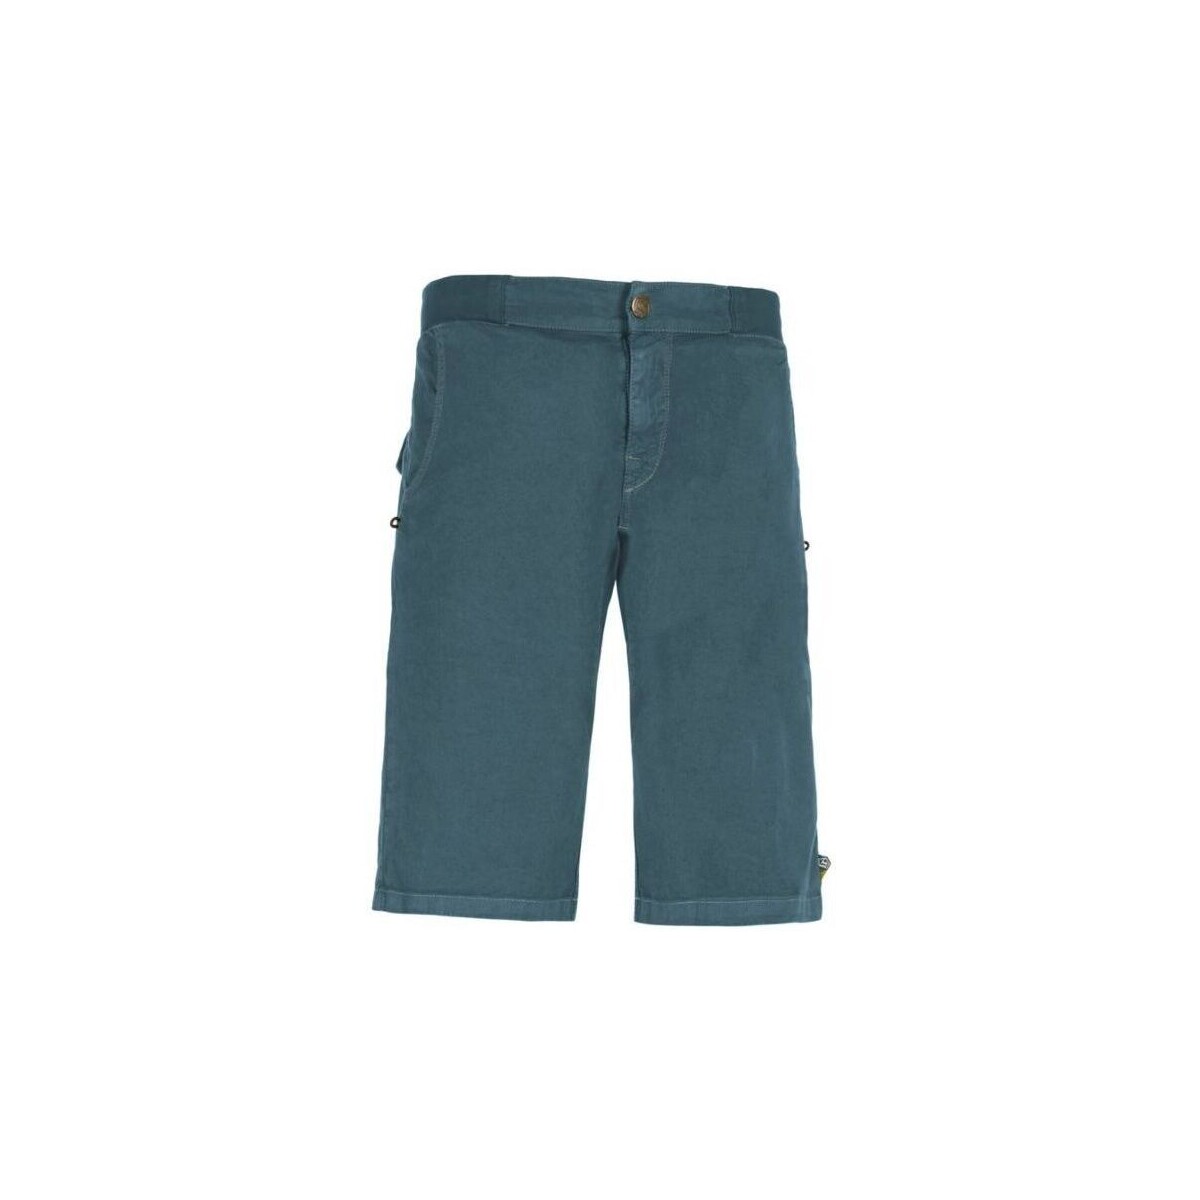 textil Hombre Shorts / Bermudas E9 Pantalones cortos Kroc Flax Hombre Blue Ceuse Azul